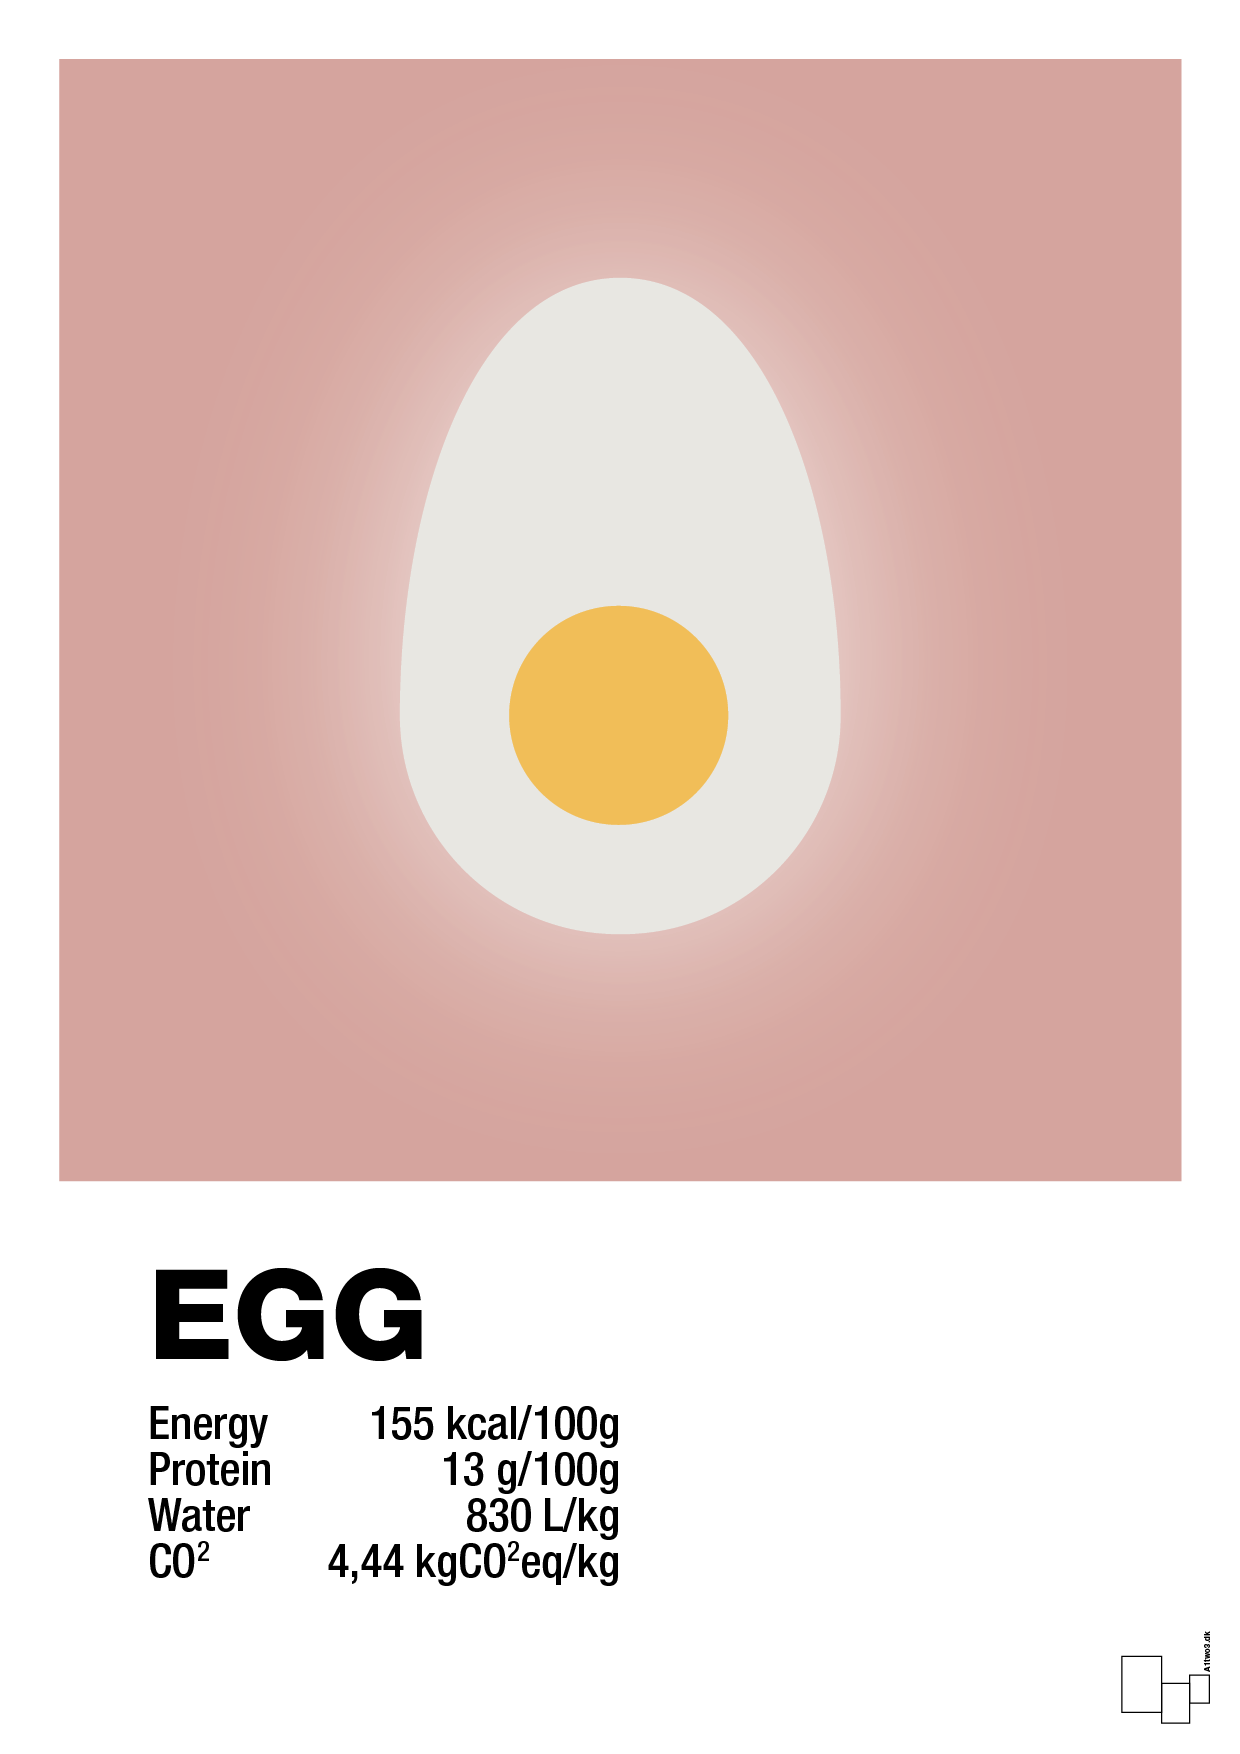 egg nutrition og miljø - Plakat med Mad & Drikke i Bubble Shell